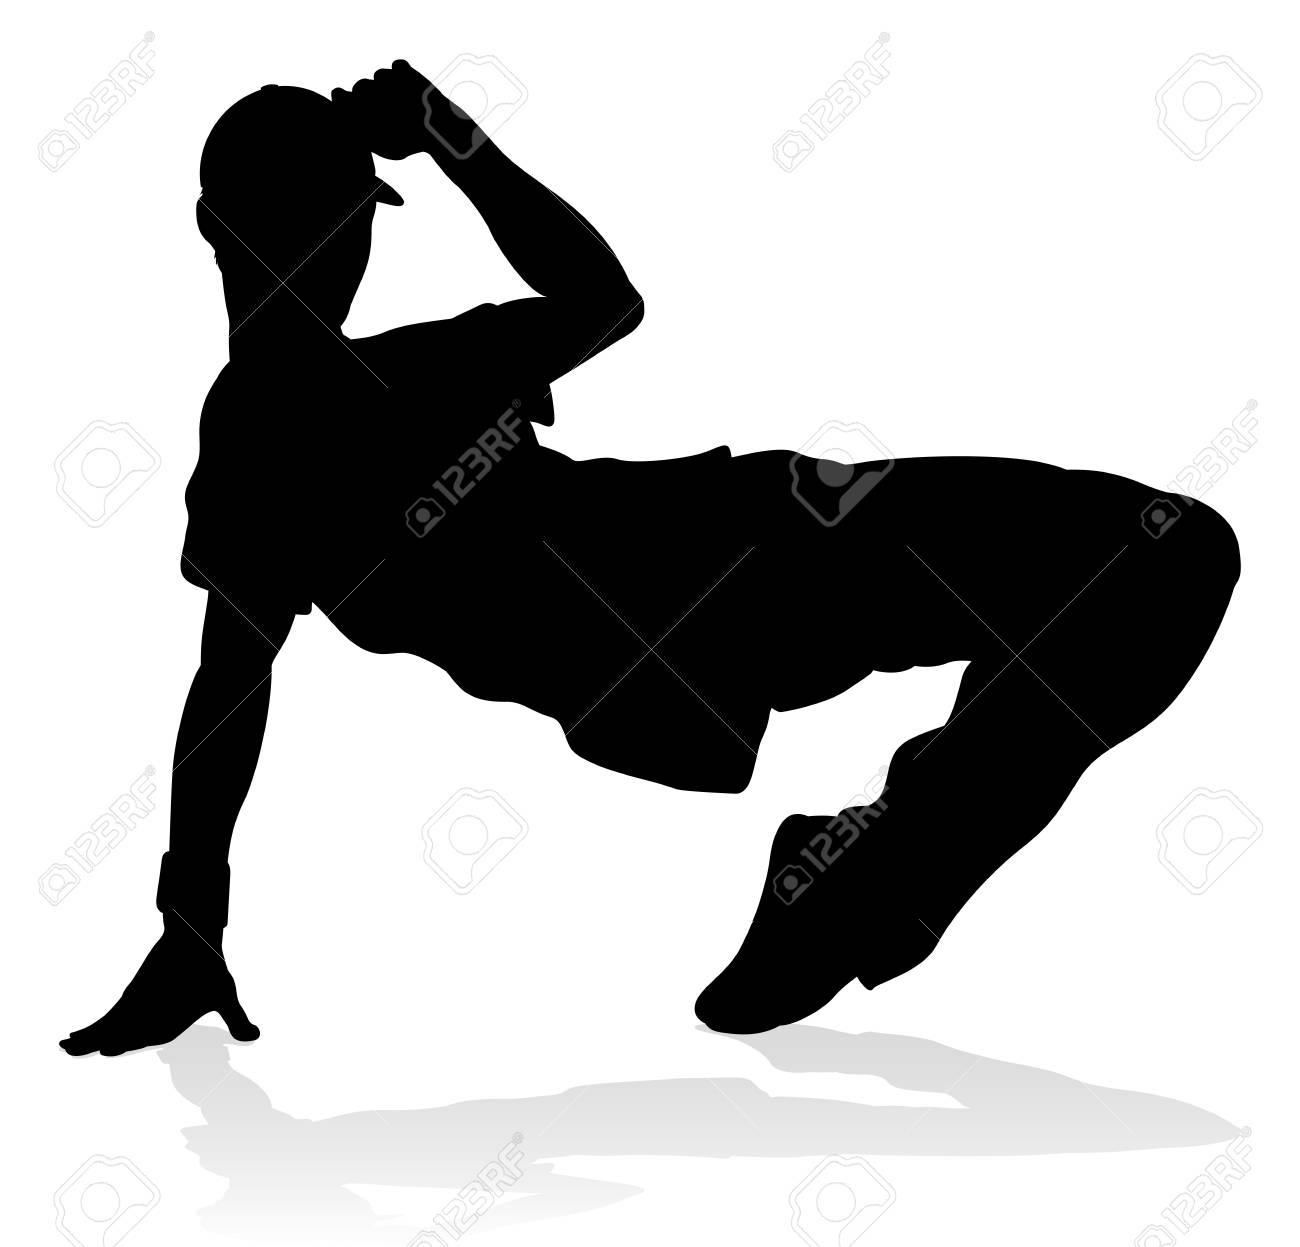 A male street dance hip hop dancer in silhouette.